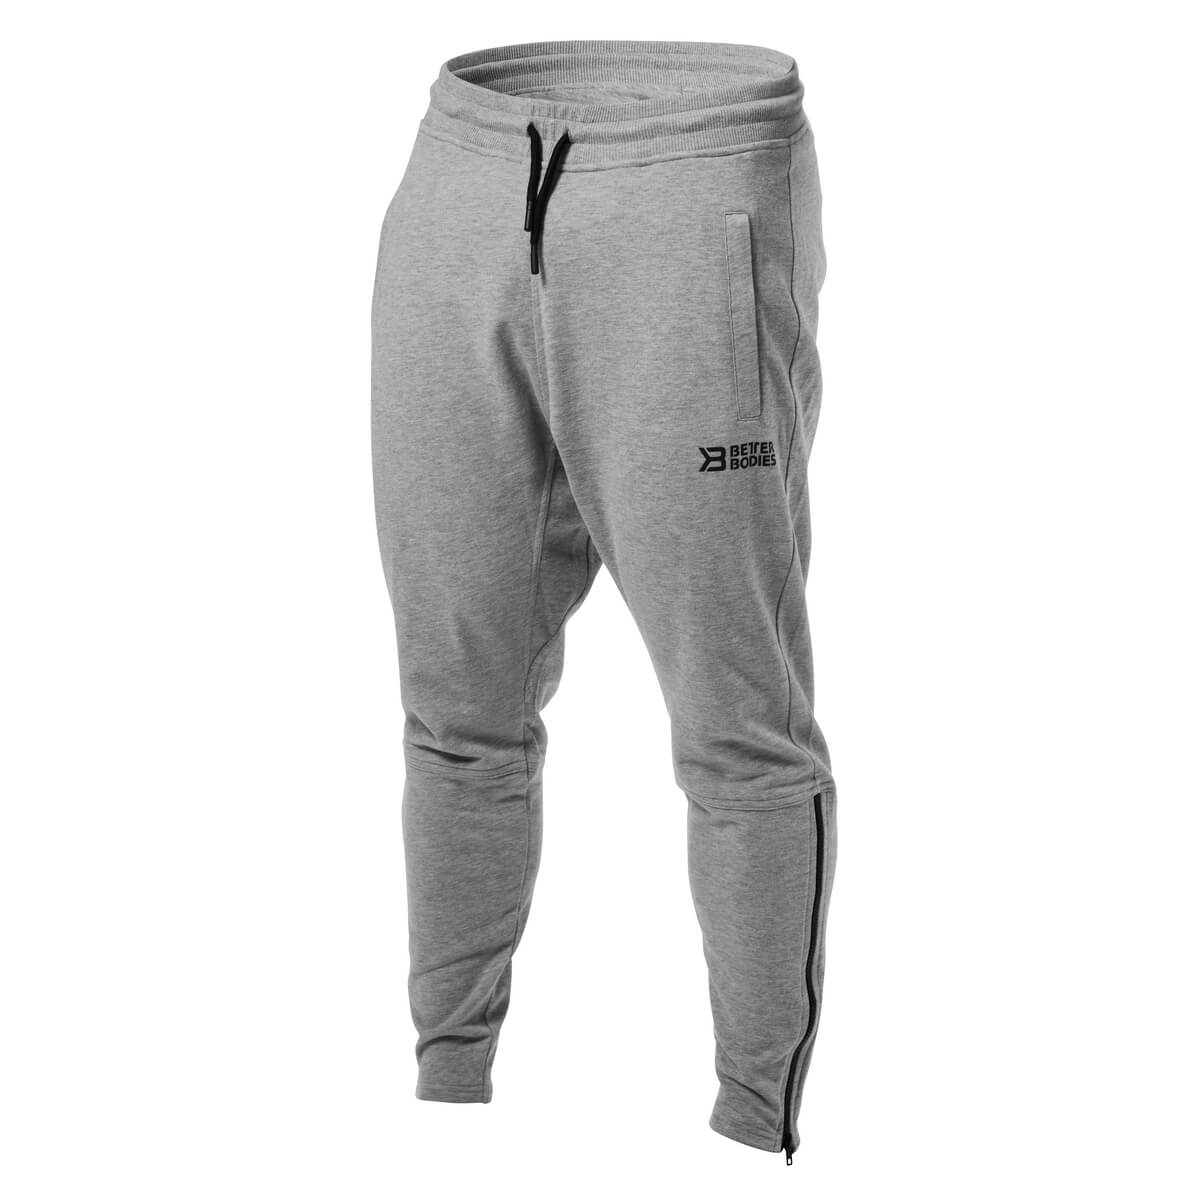 Kolla in Harlem Zip Pants, grey melange, Better Bodies hos SportGymButiken.se